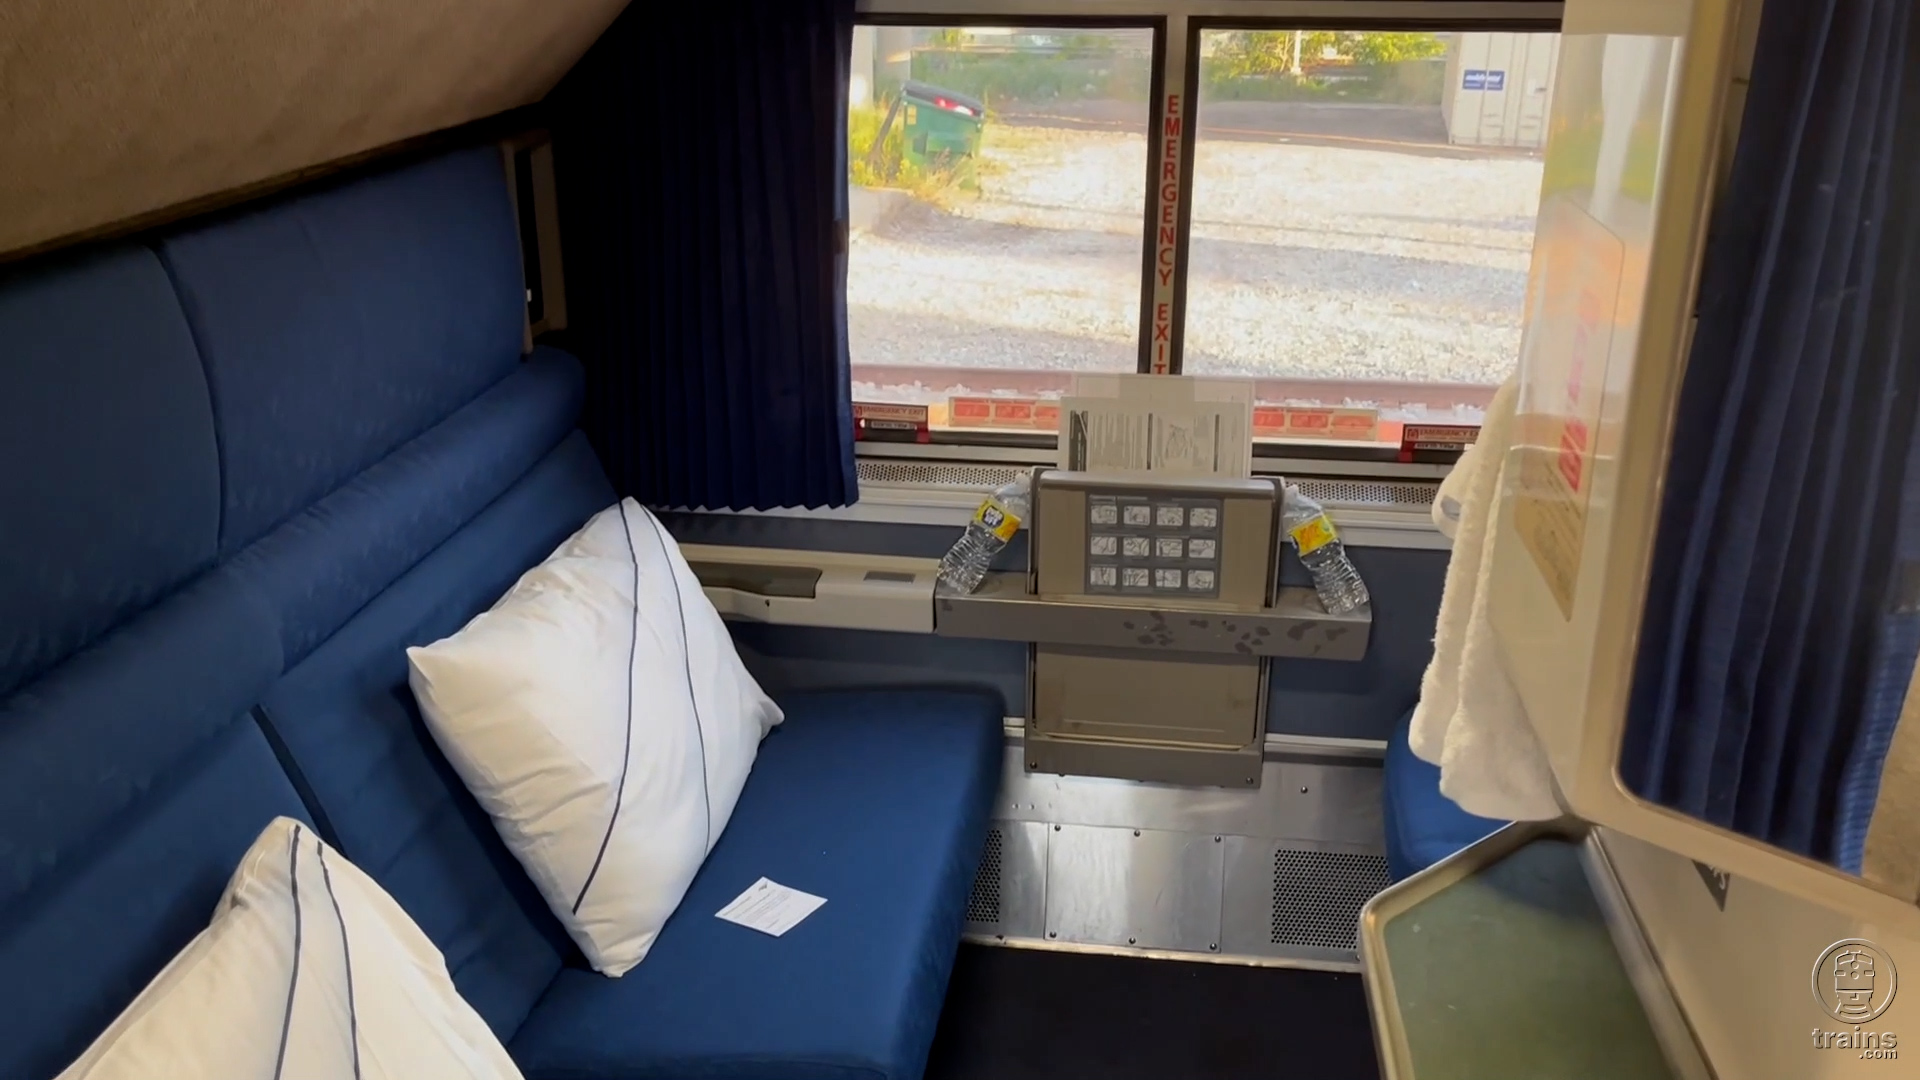 Amtrak insider travel tips from Marc Magliari